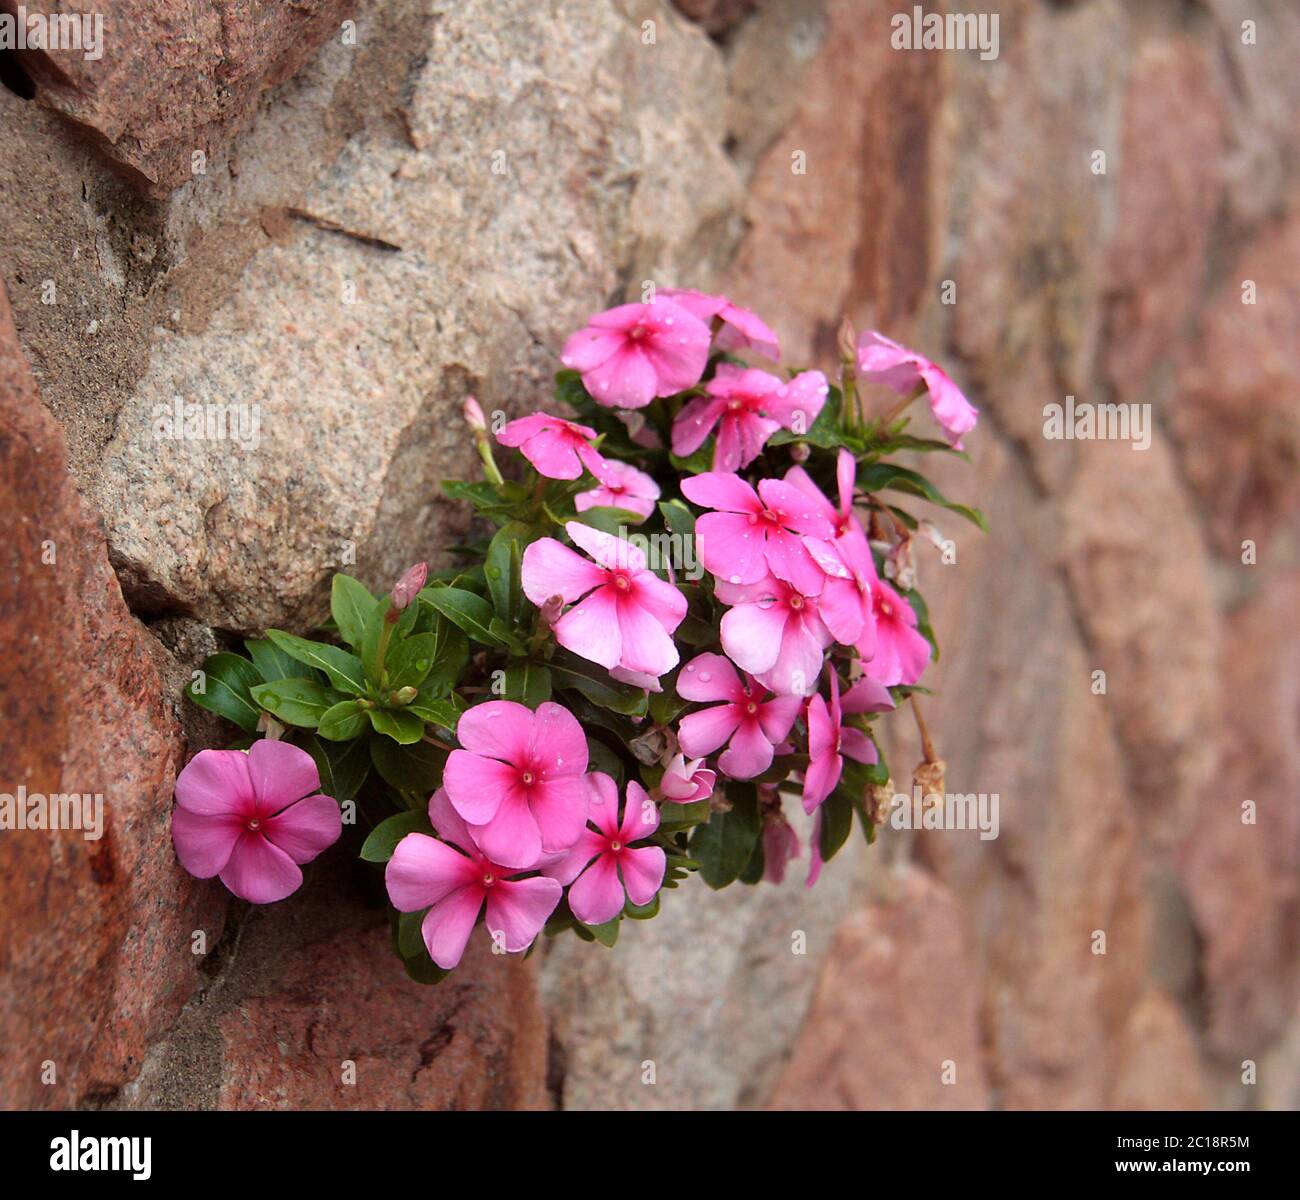 Flower growing from rock in Australia Stock Photo